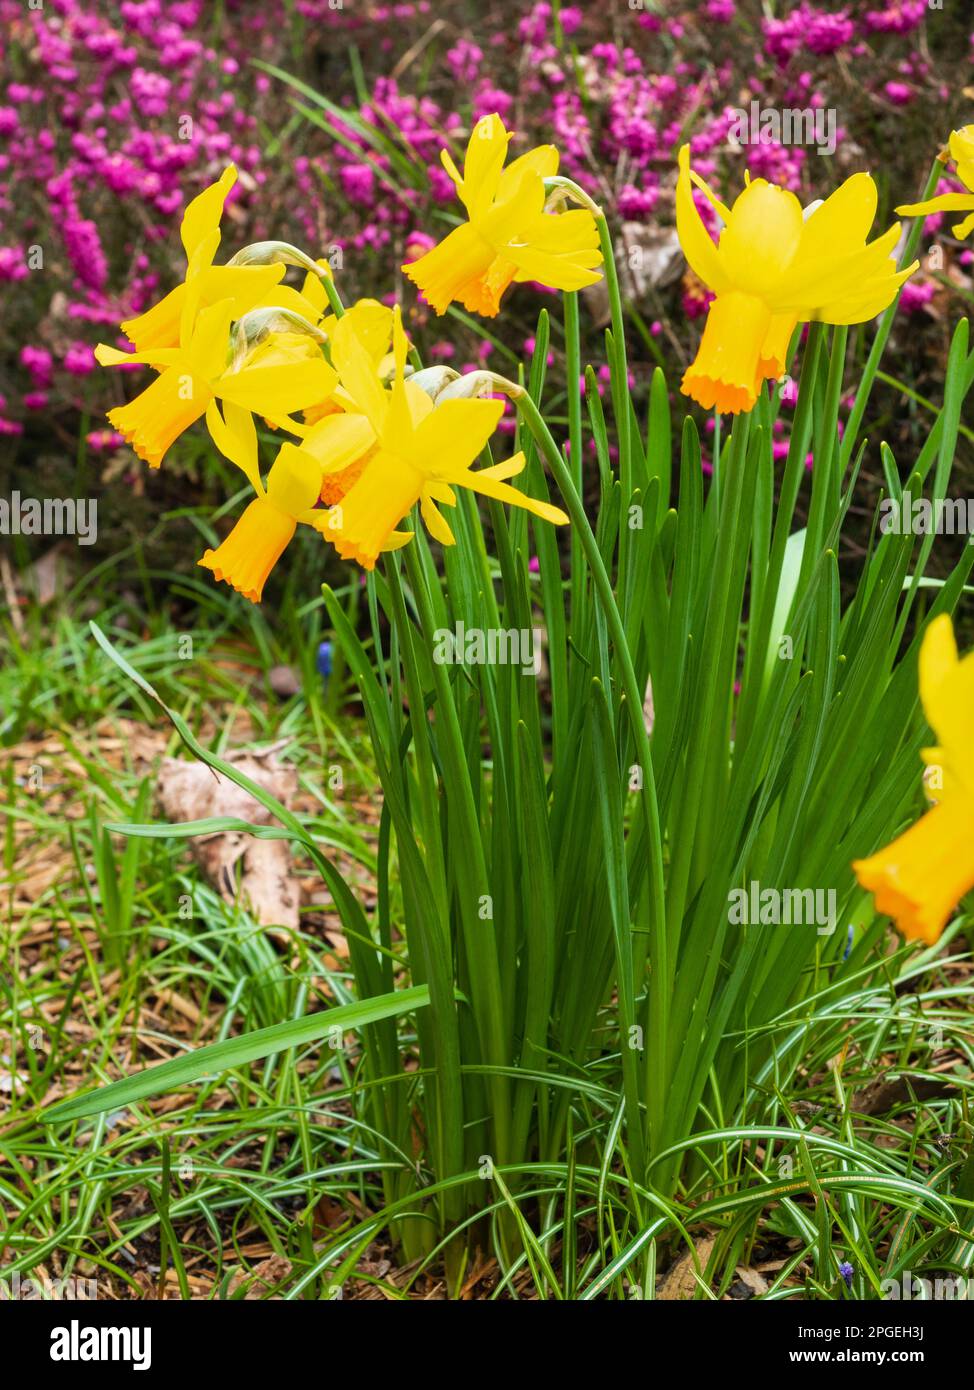 Orange trumpet and yellow, reflexed petals of the dwarf cyclamineus hybrid daffodil, Narcissus 'Jetfire' Stock Photo